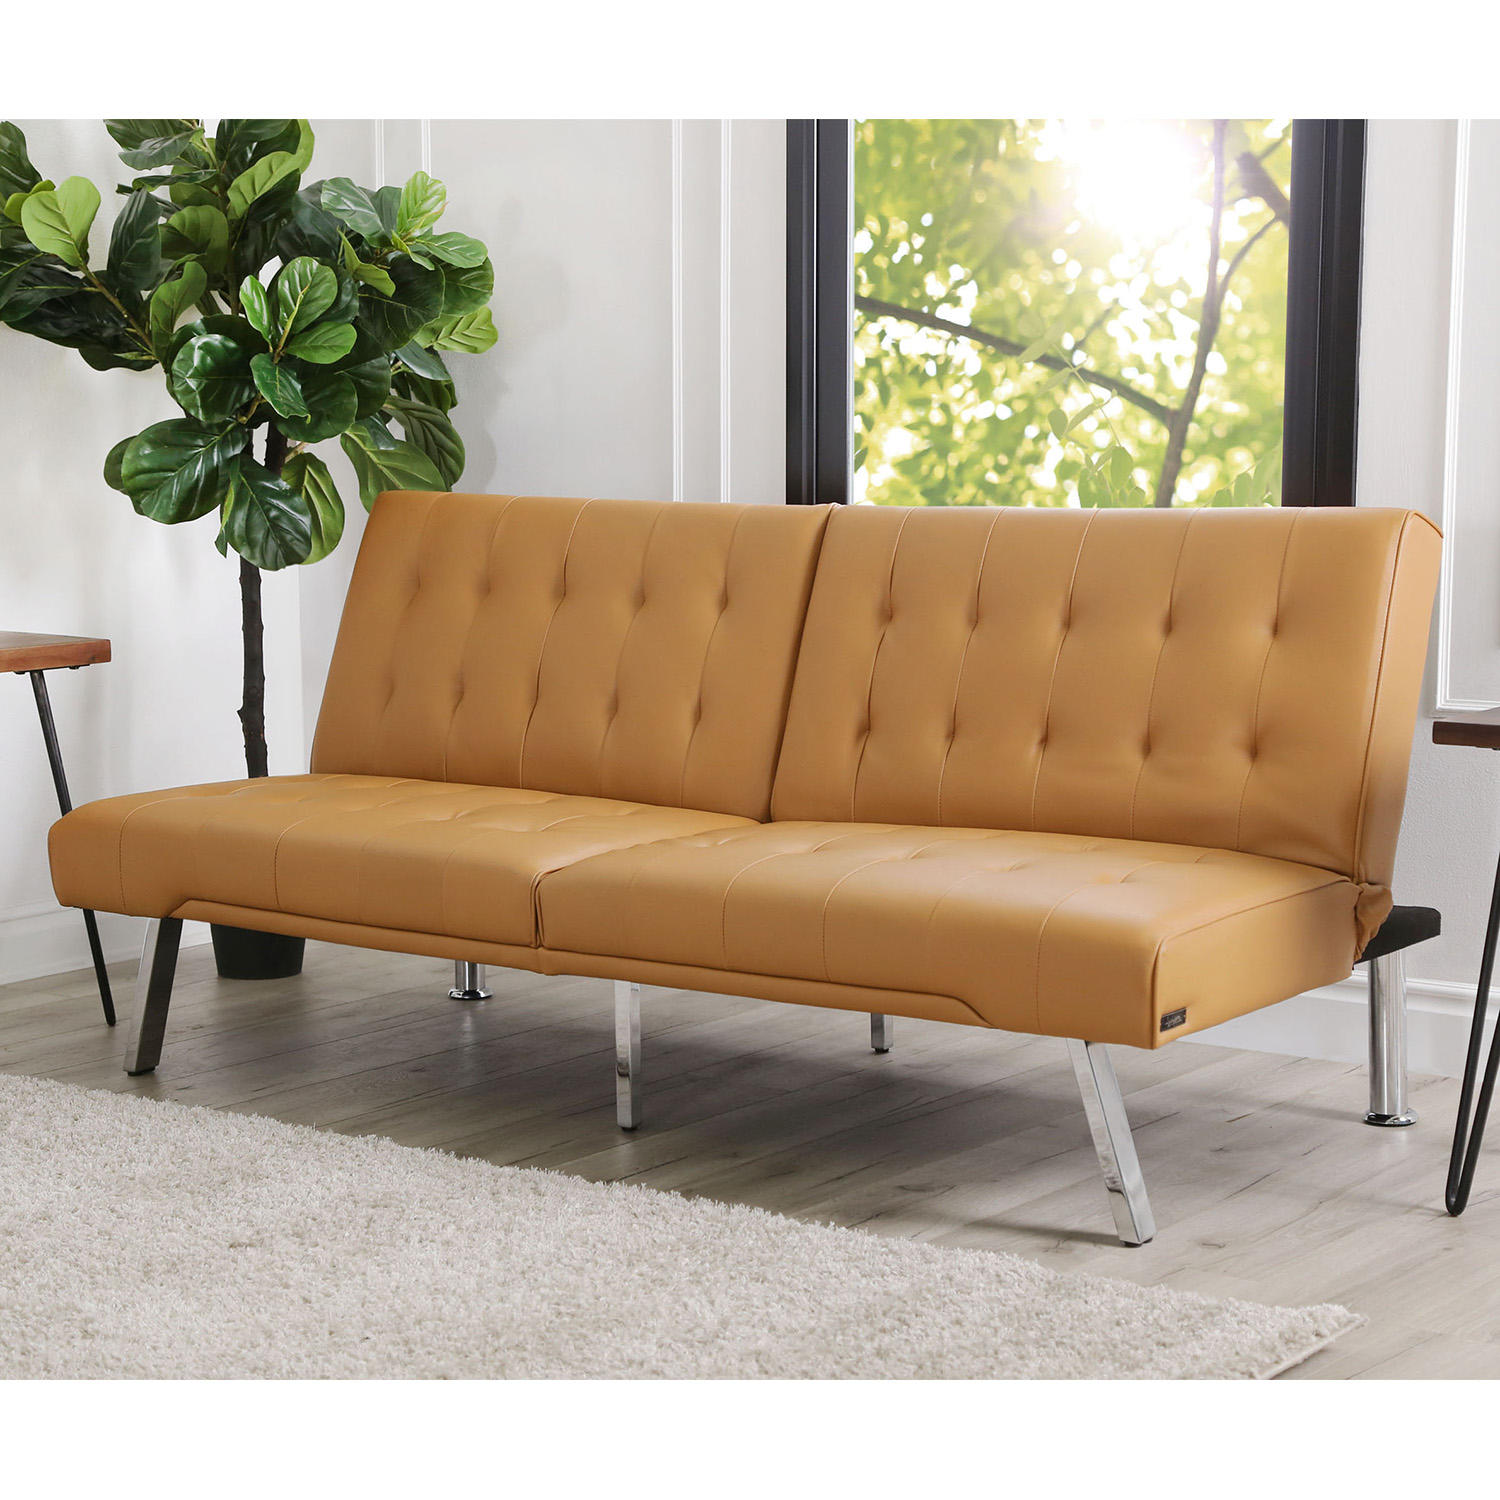 Kenzie Leather Foldable Futon Sofa Bed